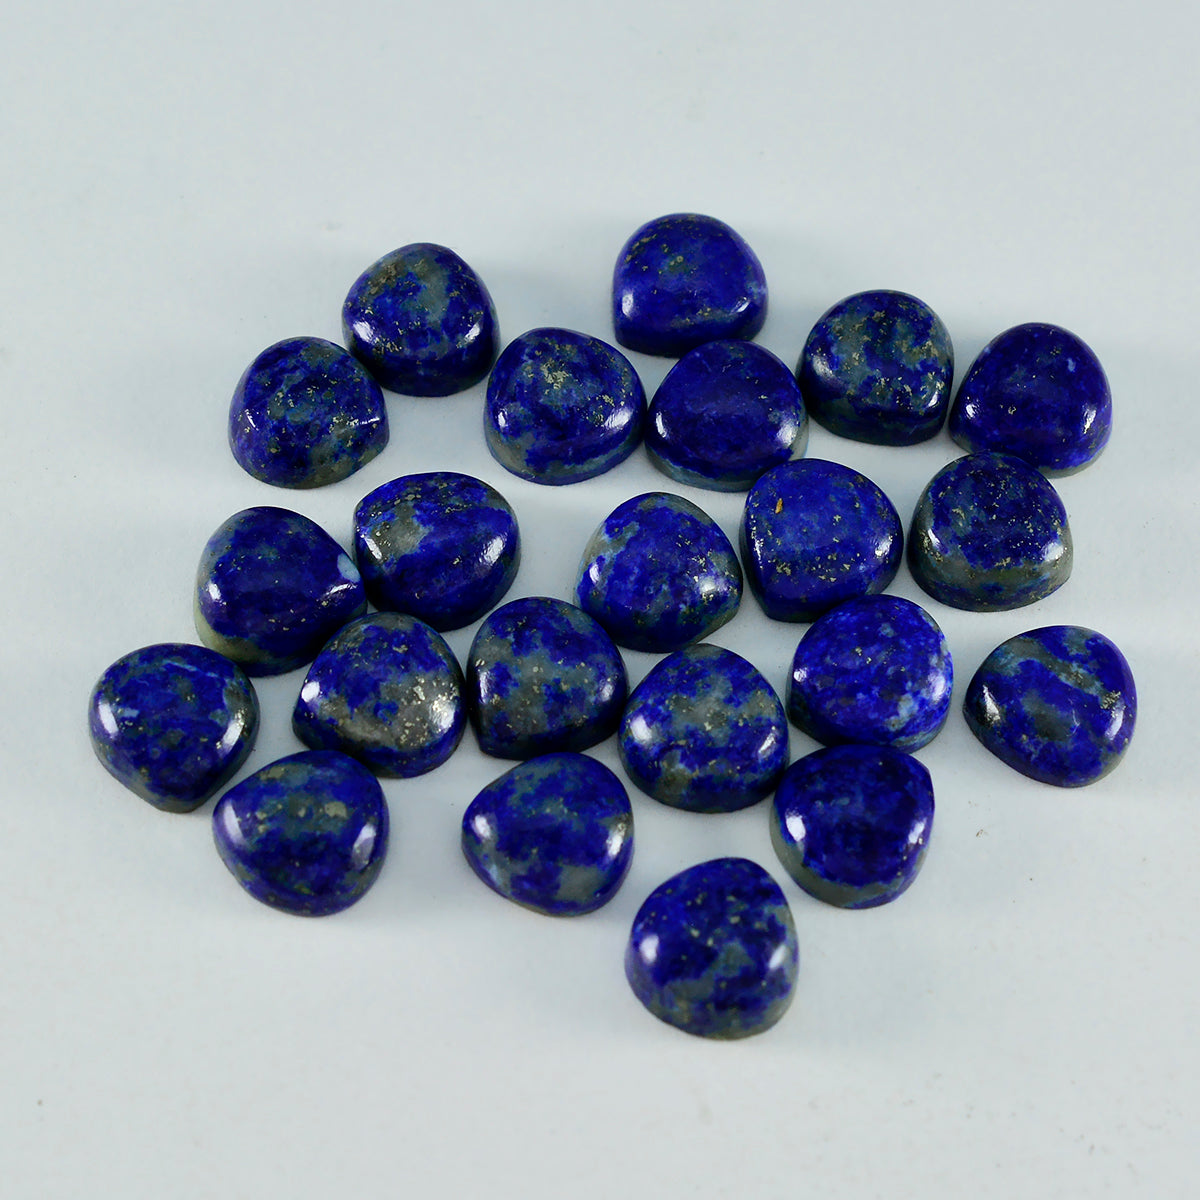 Riyogems 1PC Blauwe Lapis Lazuli Cabochon 6x6 mm Hartvorm AAA Kwaliteit Losse Edelstenen